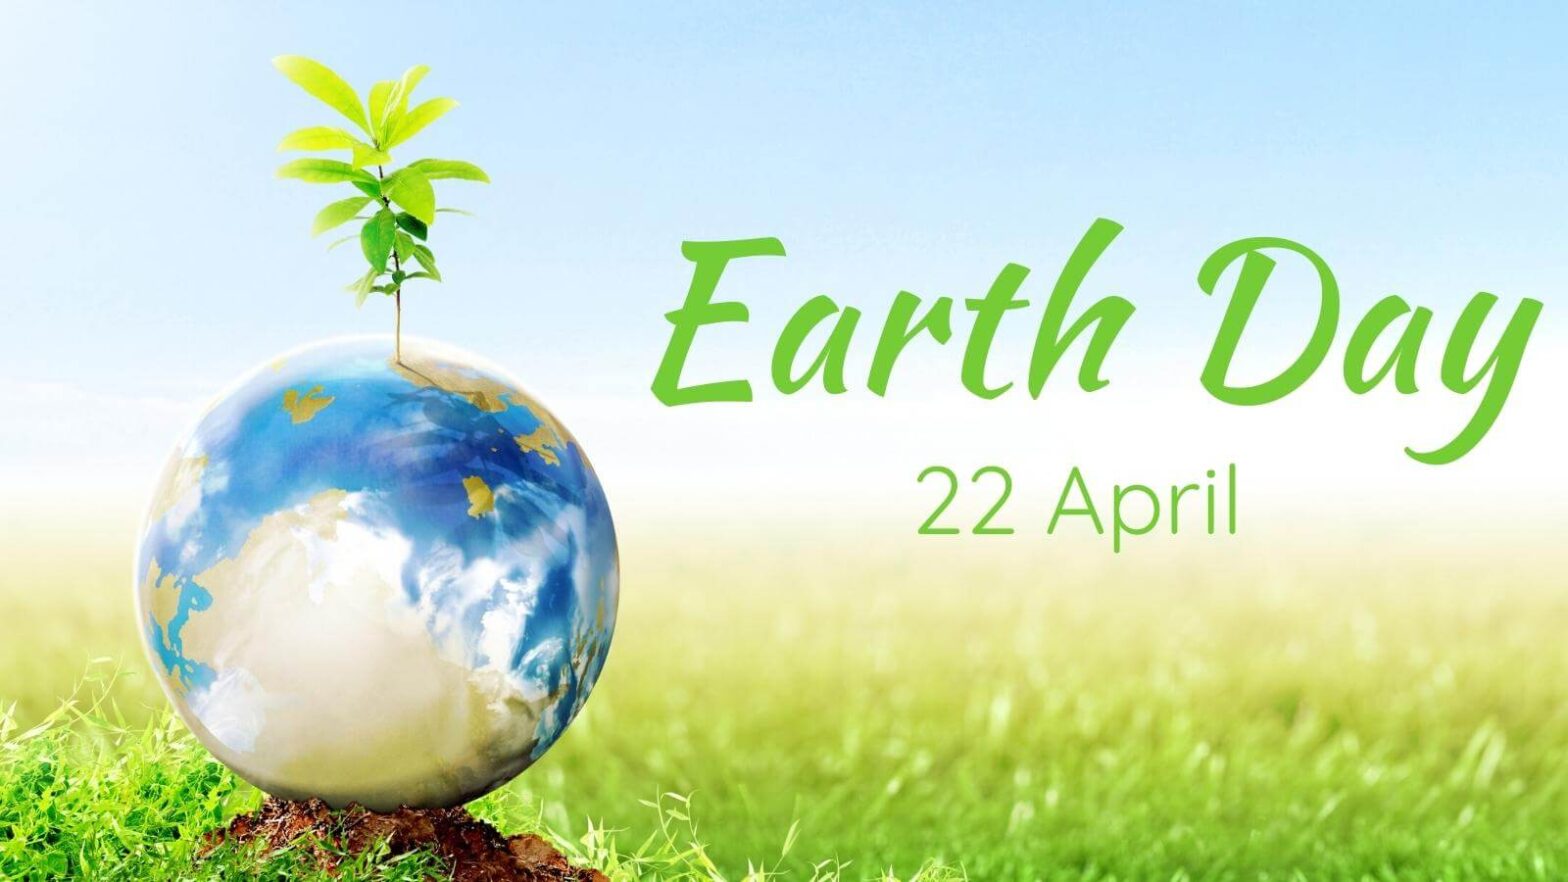 CDA organizes seminar, awareness walk to observe 'Earth Day'